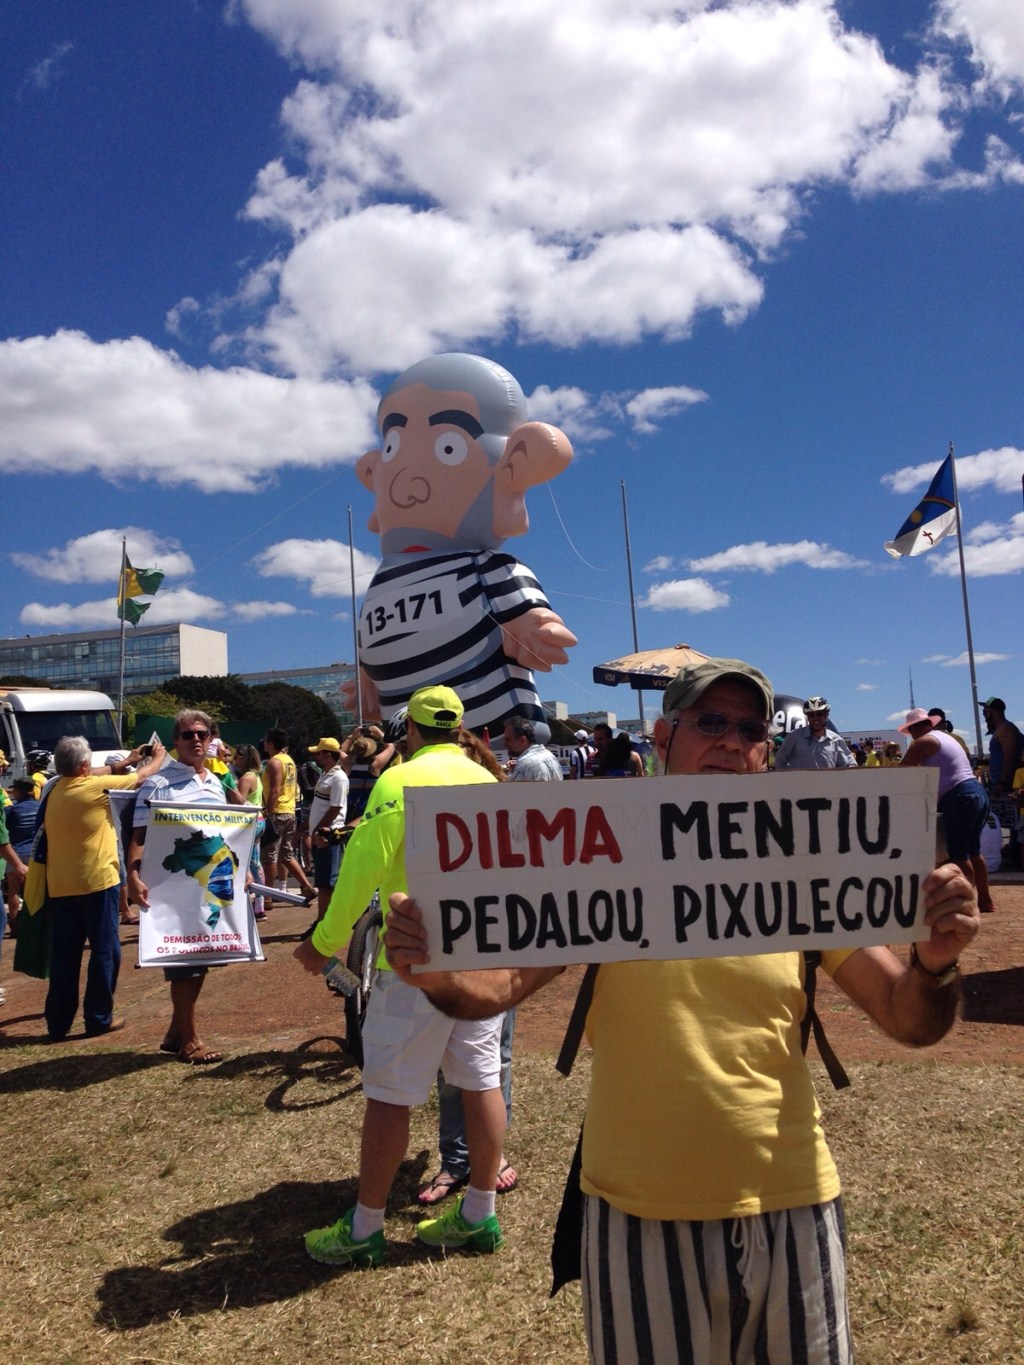 Mnifestante em Brasília